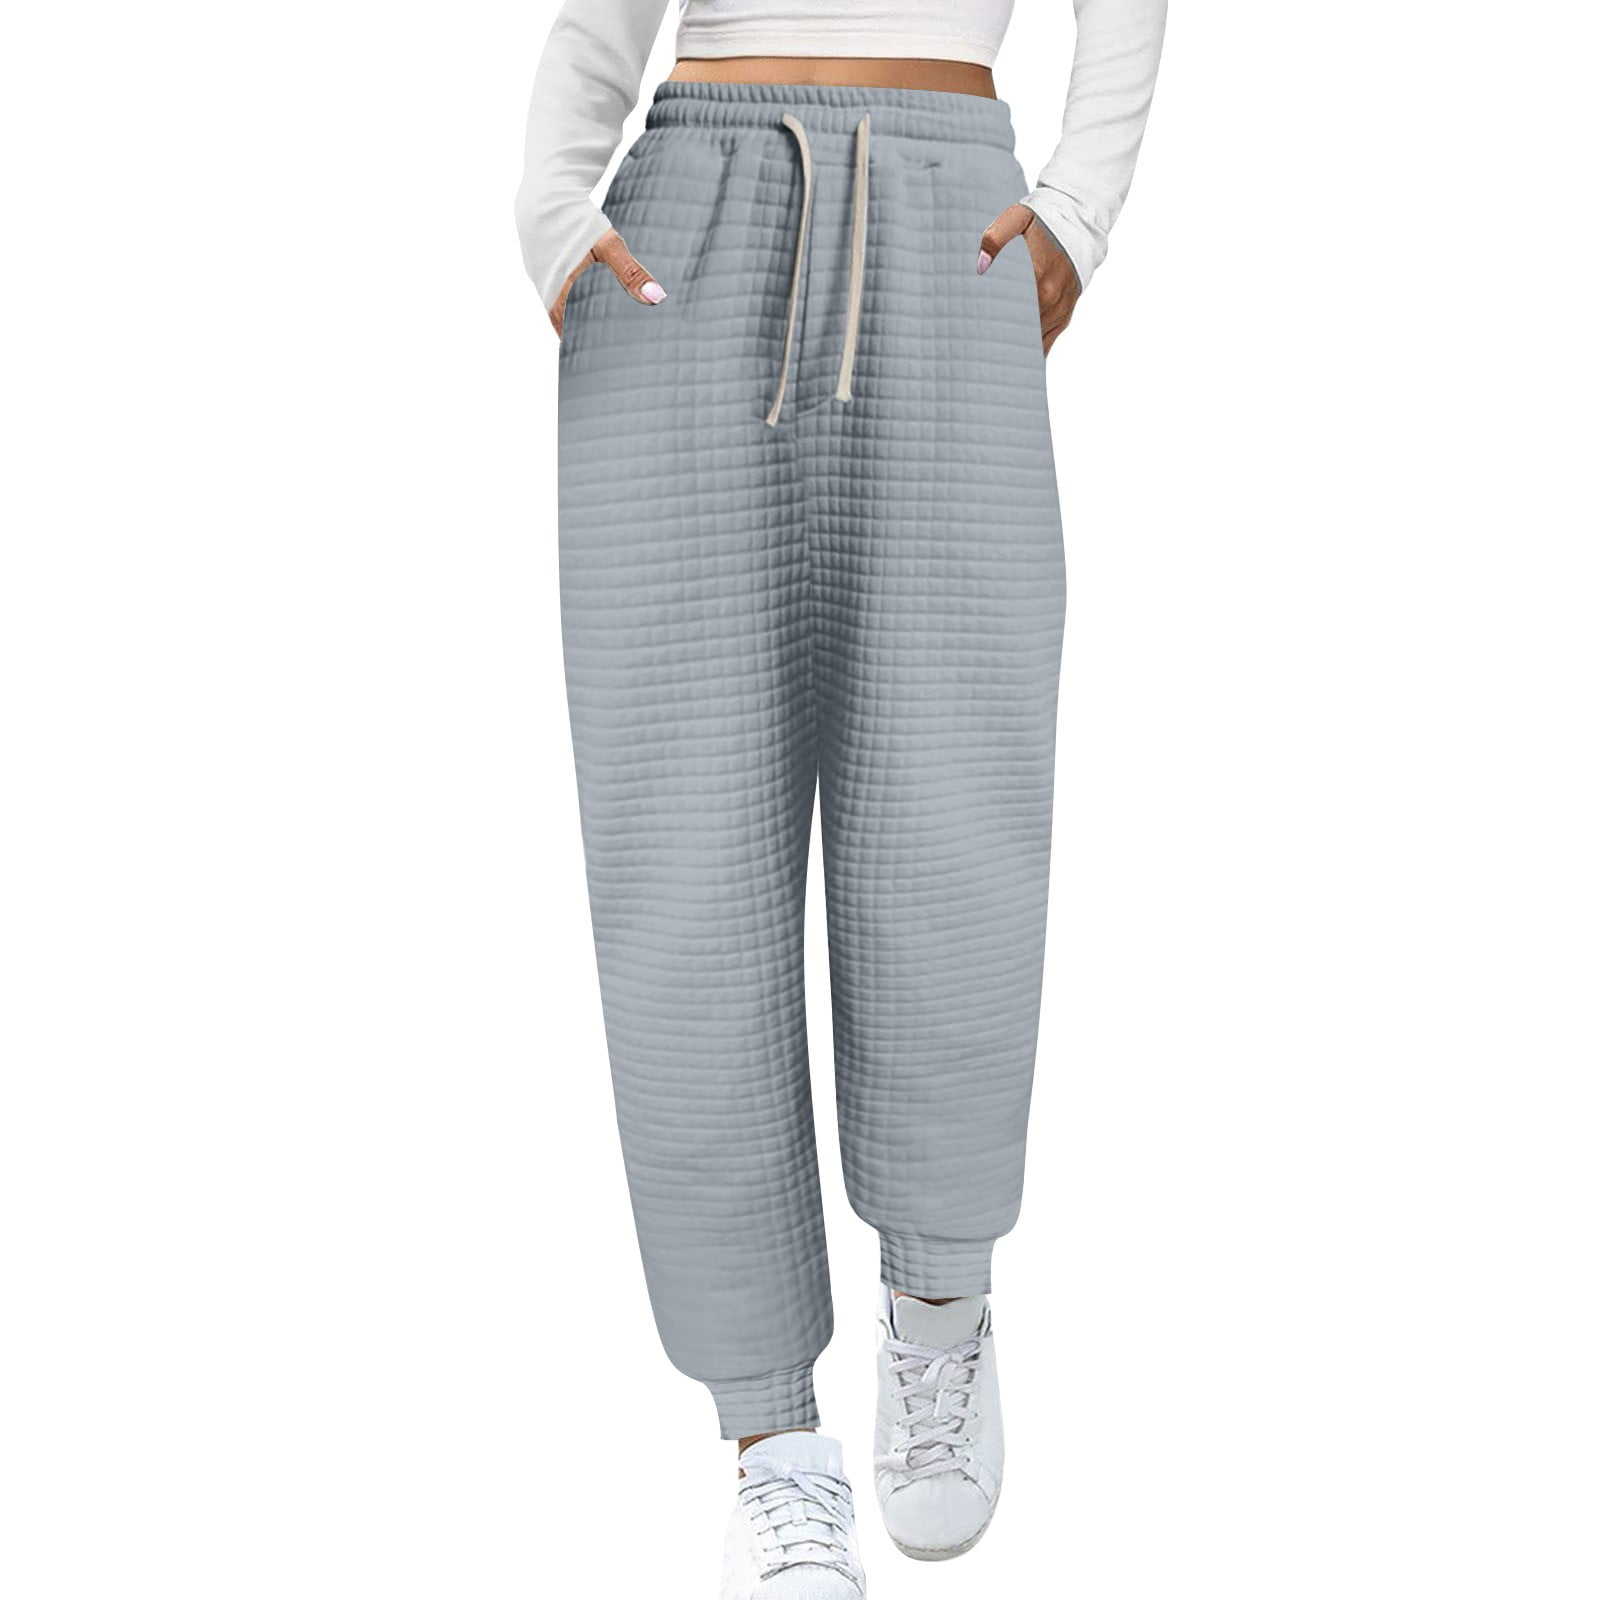 Waffle Knit Sweatpants for Women Elastic Waist Drawstring Loose Cinched  Bottom Jogging Sweat Pants with Pockets (Medium, Gray)